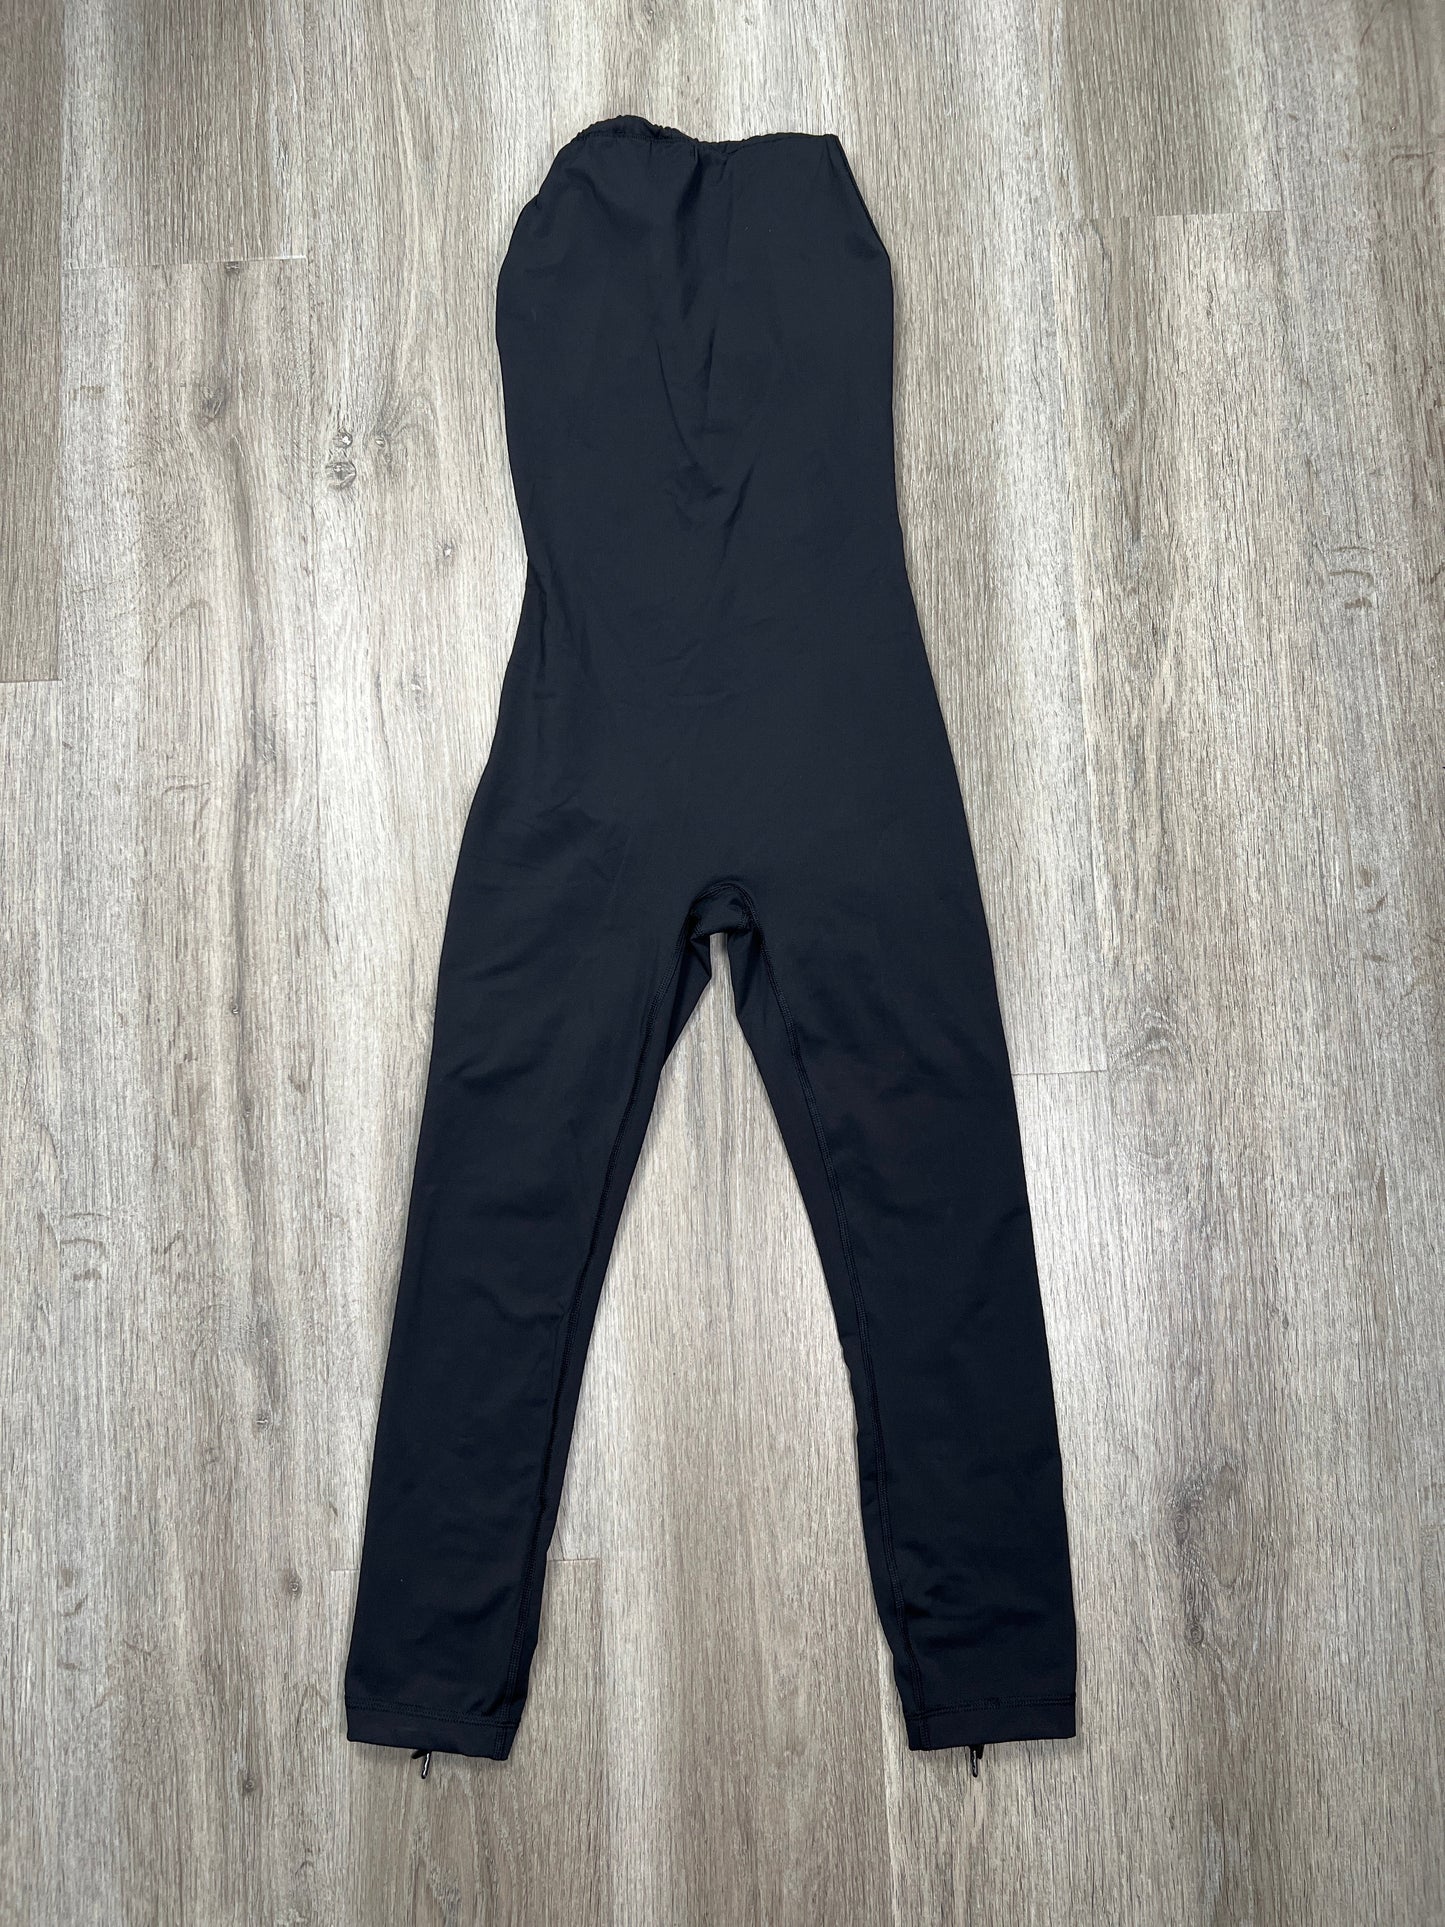 Black Jumpsuit Lululemon, Size S